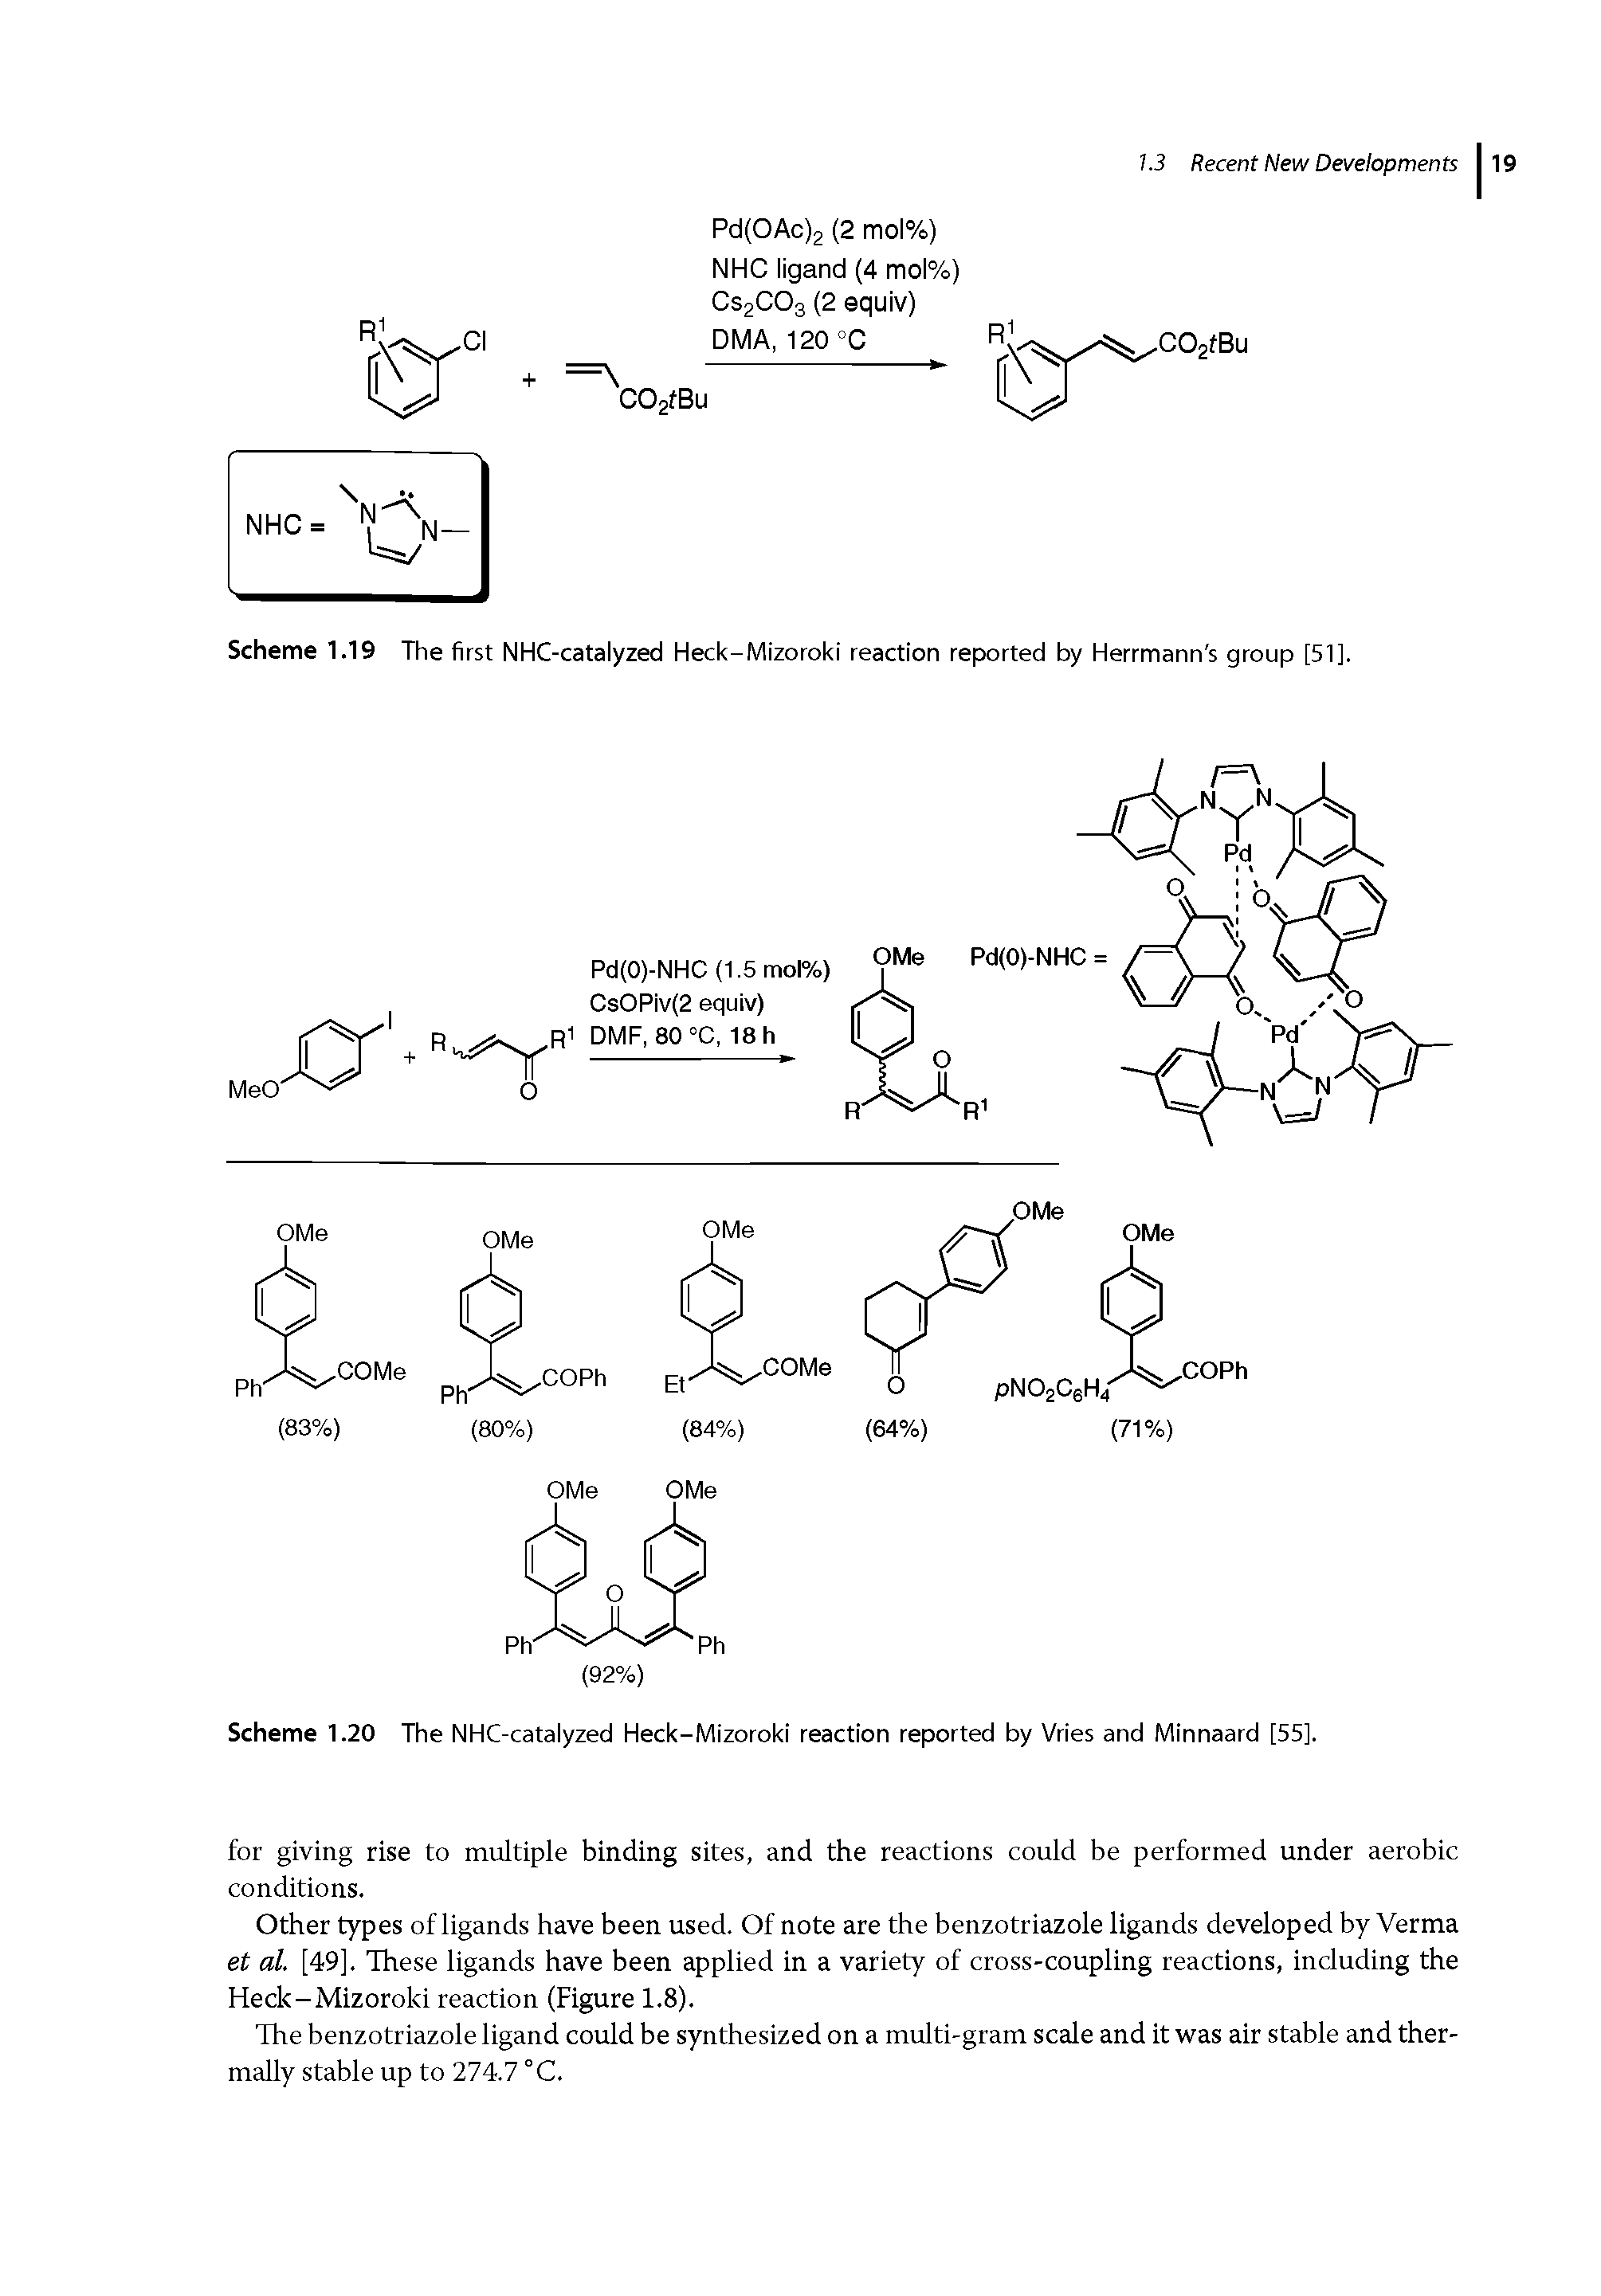 Scheme 1.19 The first NHC-catalyzed Heck-Mizoroki reaction reported by Herrmann s group [51].